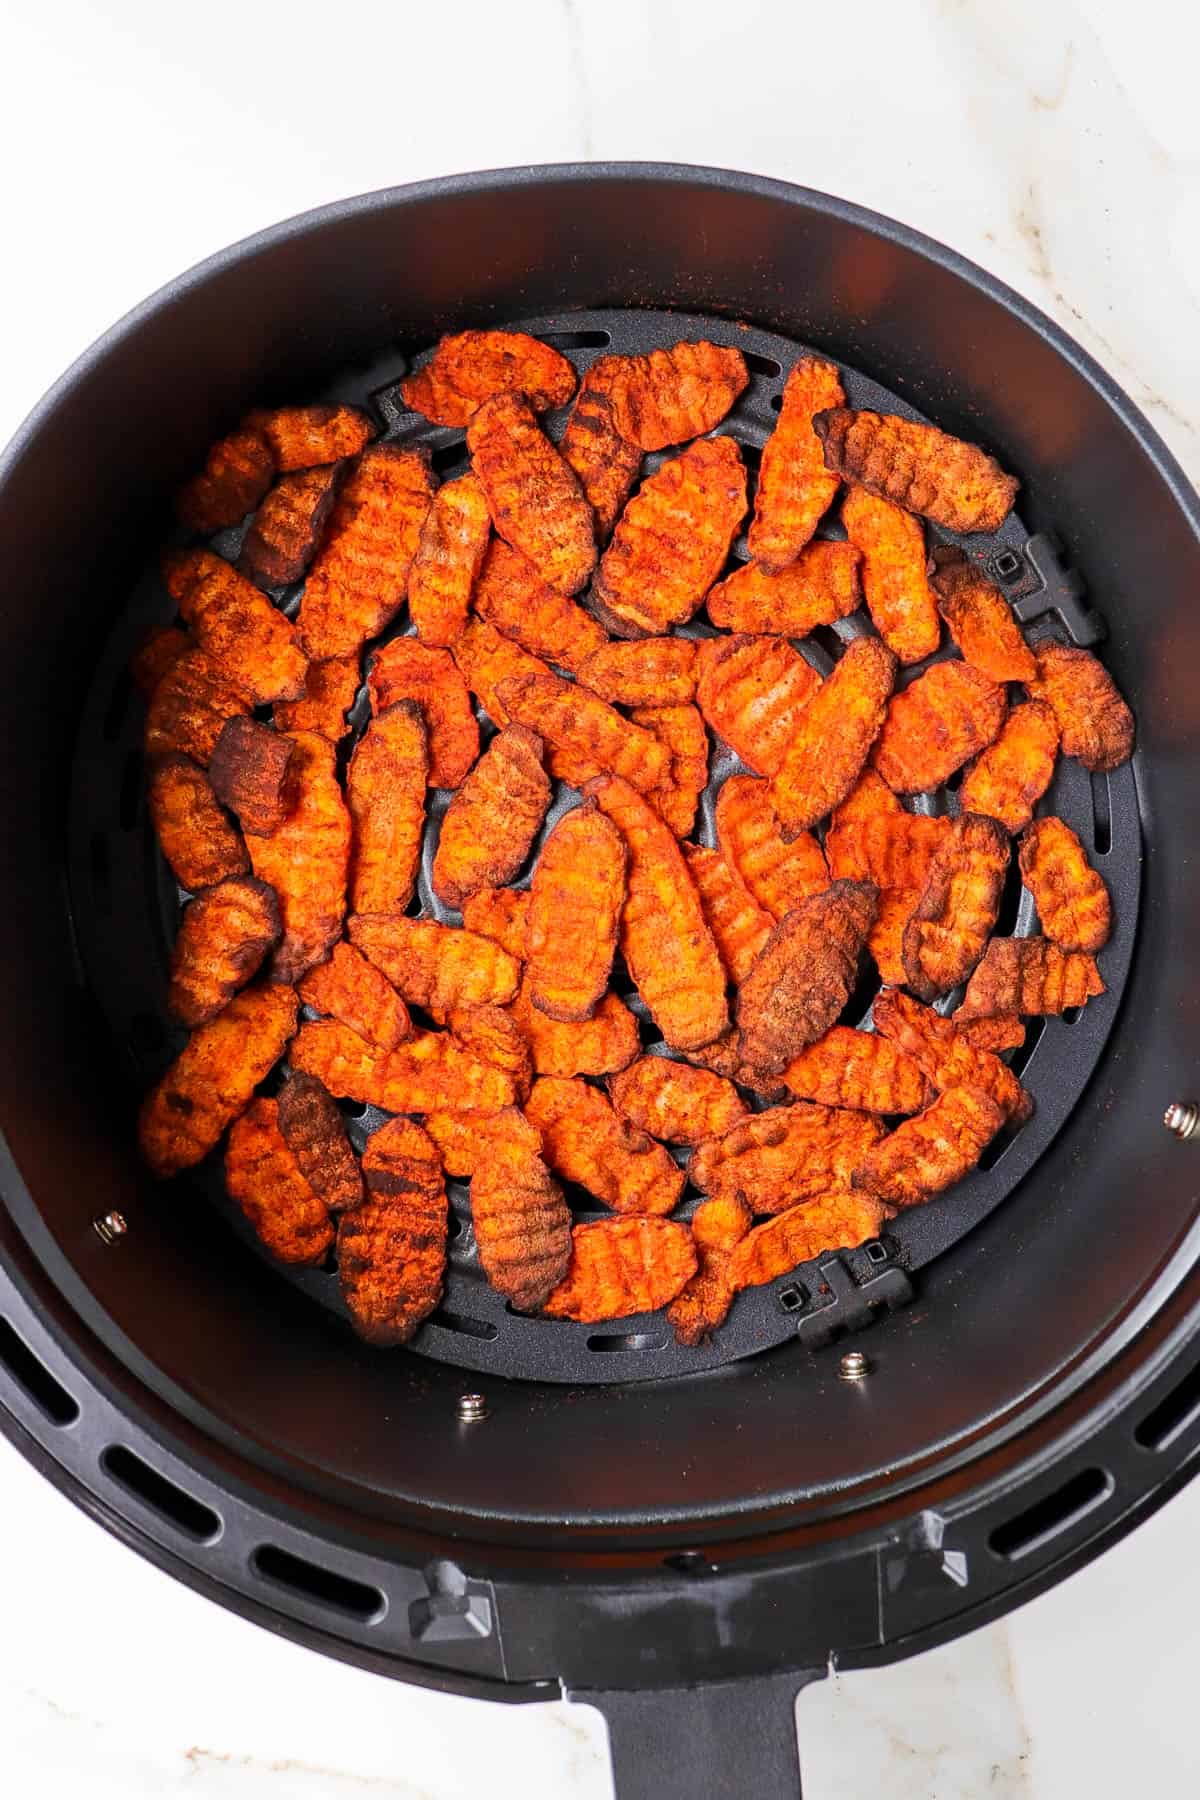 Crispy carrot pieces in air fryer basket.